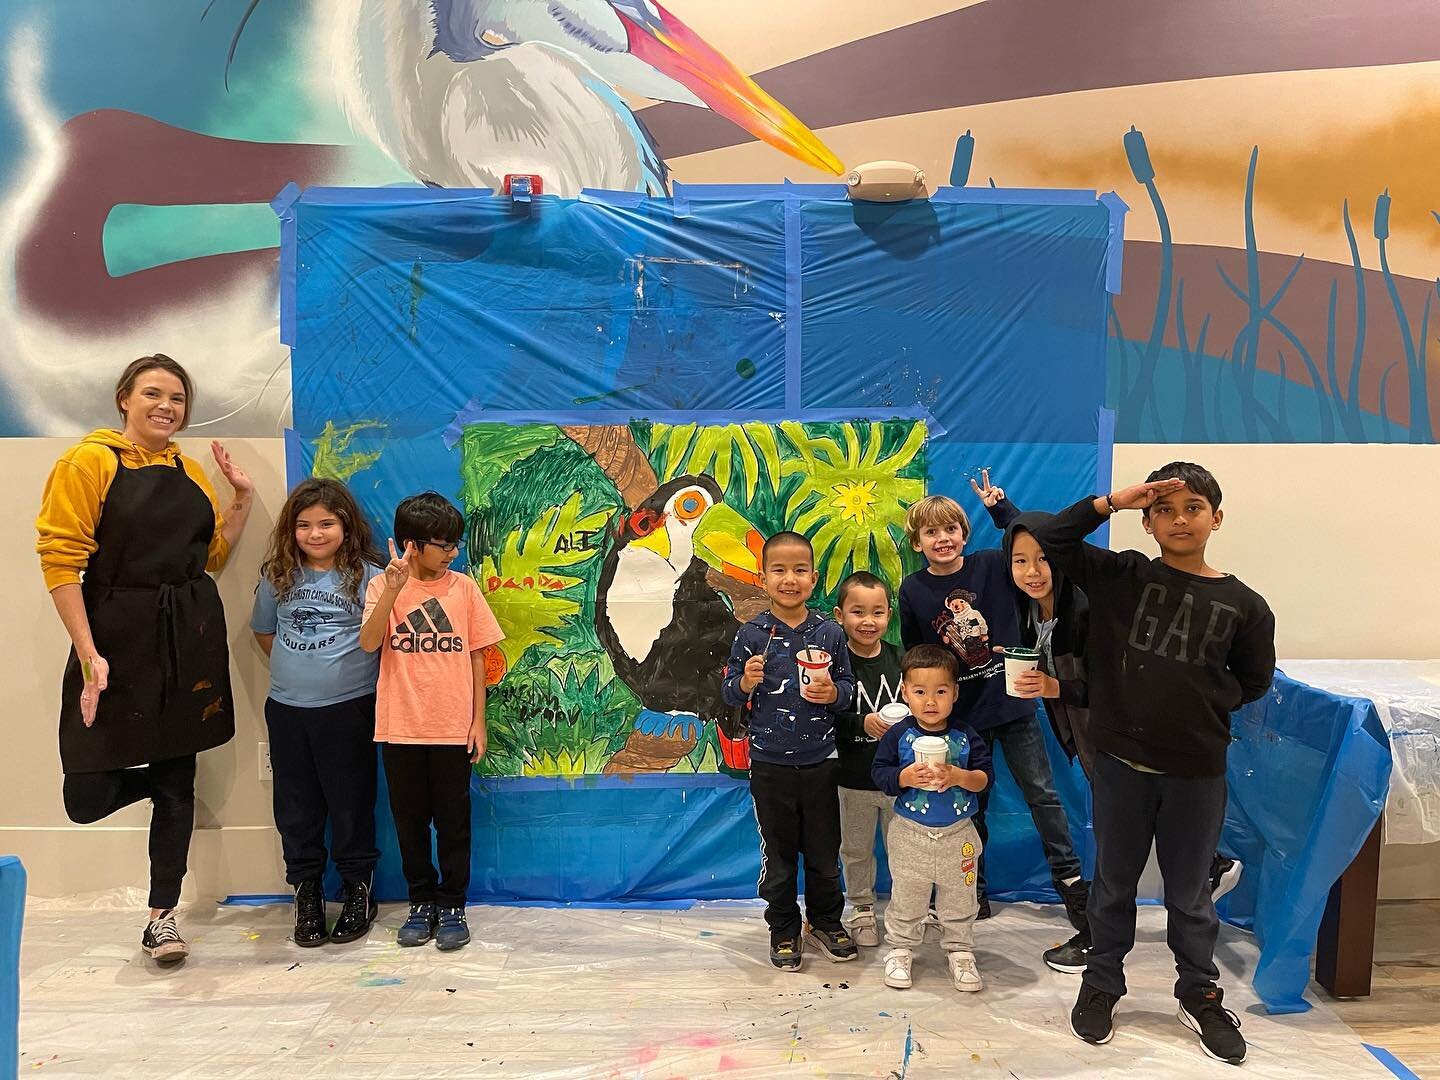 Toucan mural masterpiece created by the talented kids at @parcwesleychapel with artist in residence @dream.weavin 🌴🦜🌴
.
.
.
#artclass #kidsartclass #kidsmural #kidspainting #artistinresidence #artistresidencyprogram #artistresidency #artistgrant #